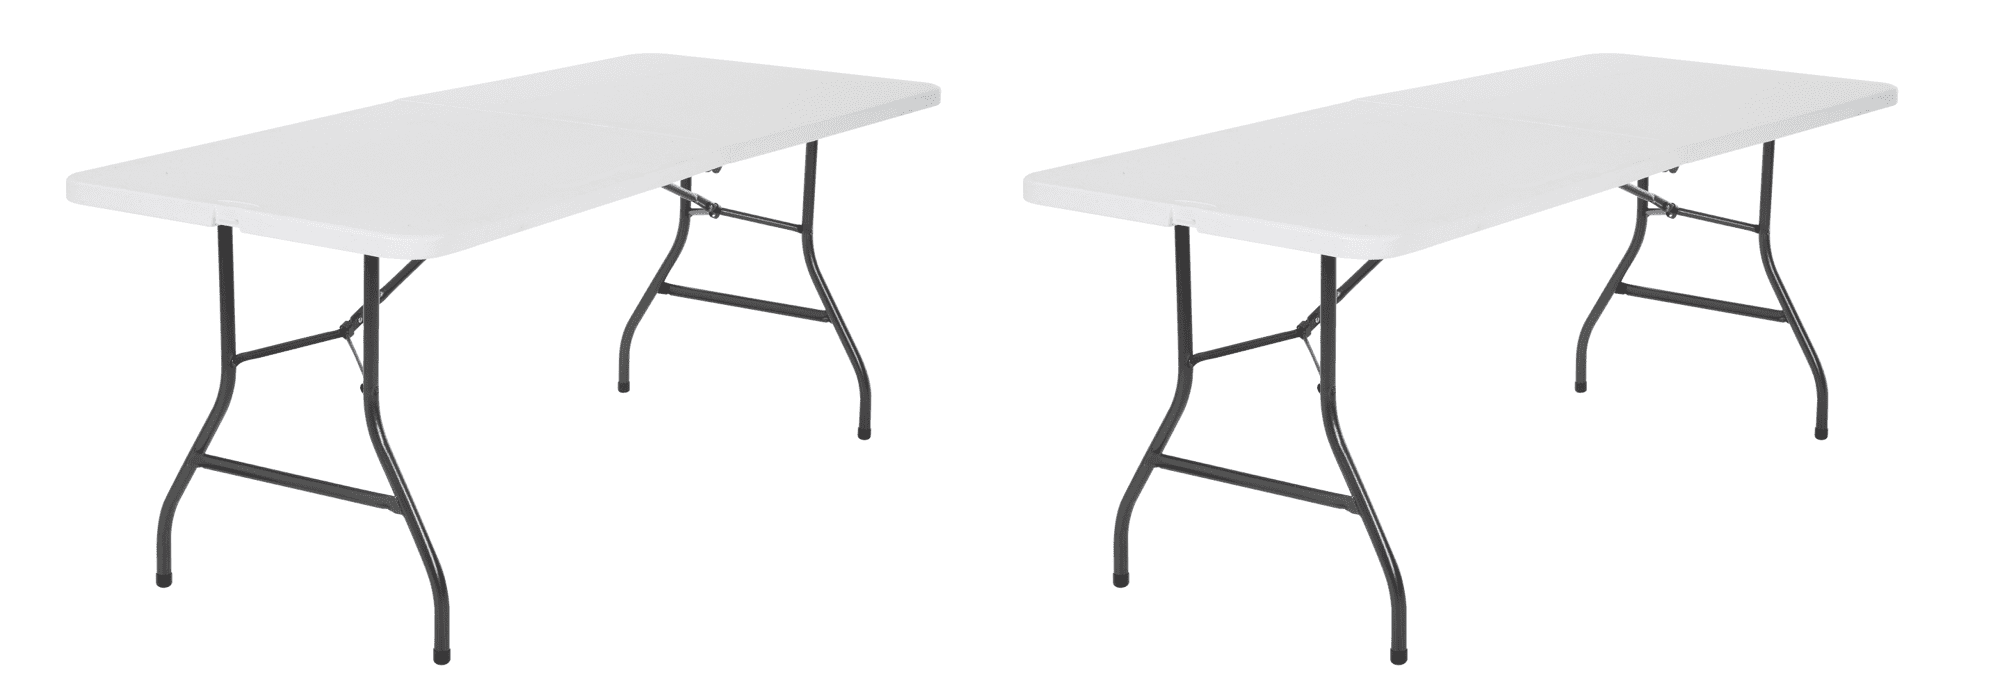 6-Feet Ft White Specked Pewter ~Top Seller~ NEW Cosco Centerfold Folding Table 